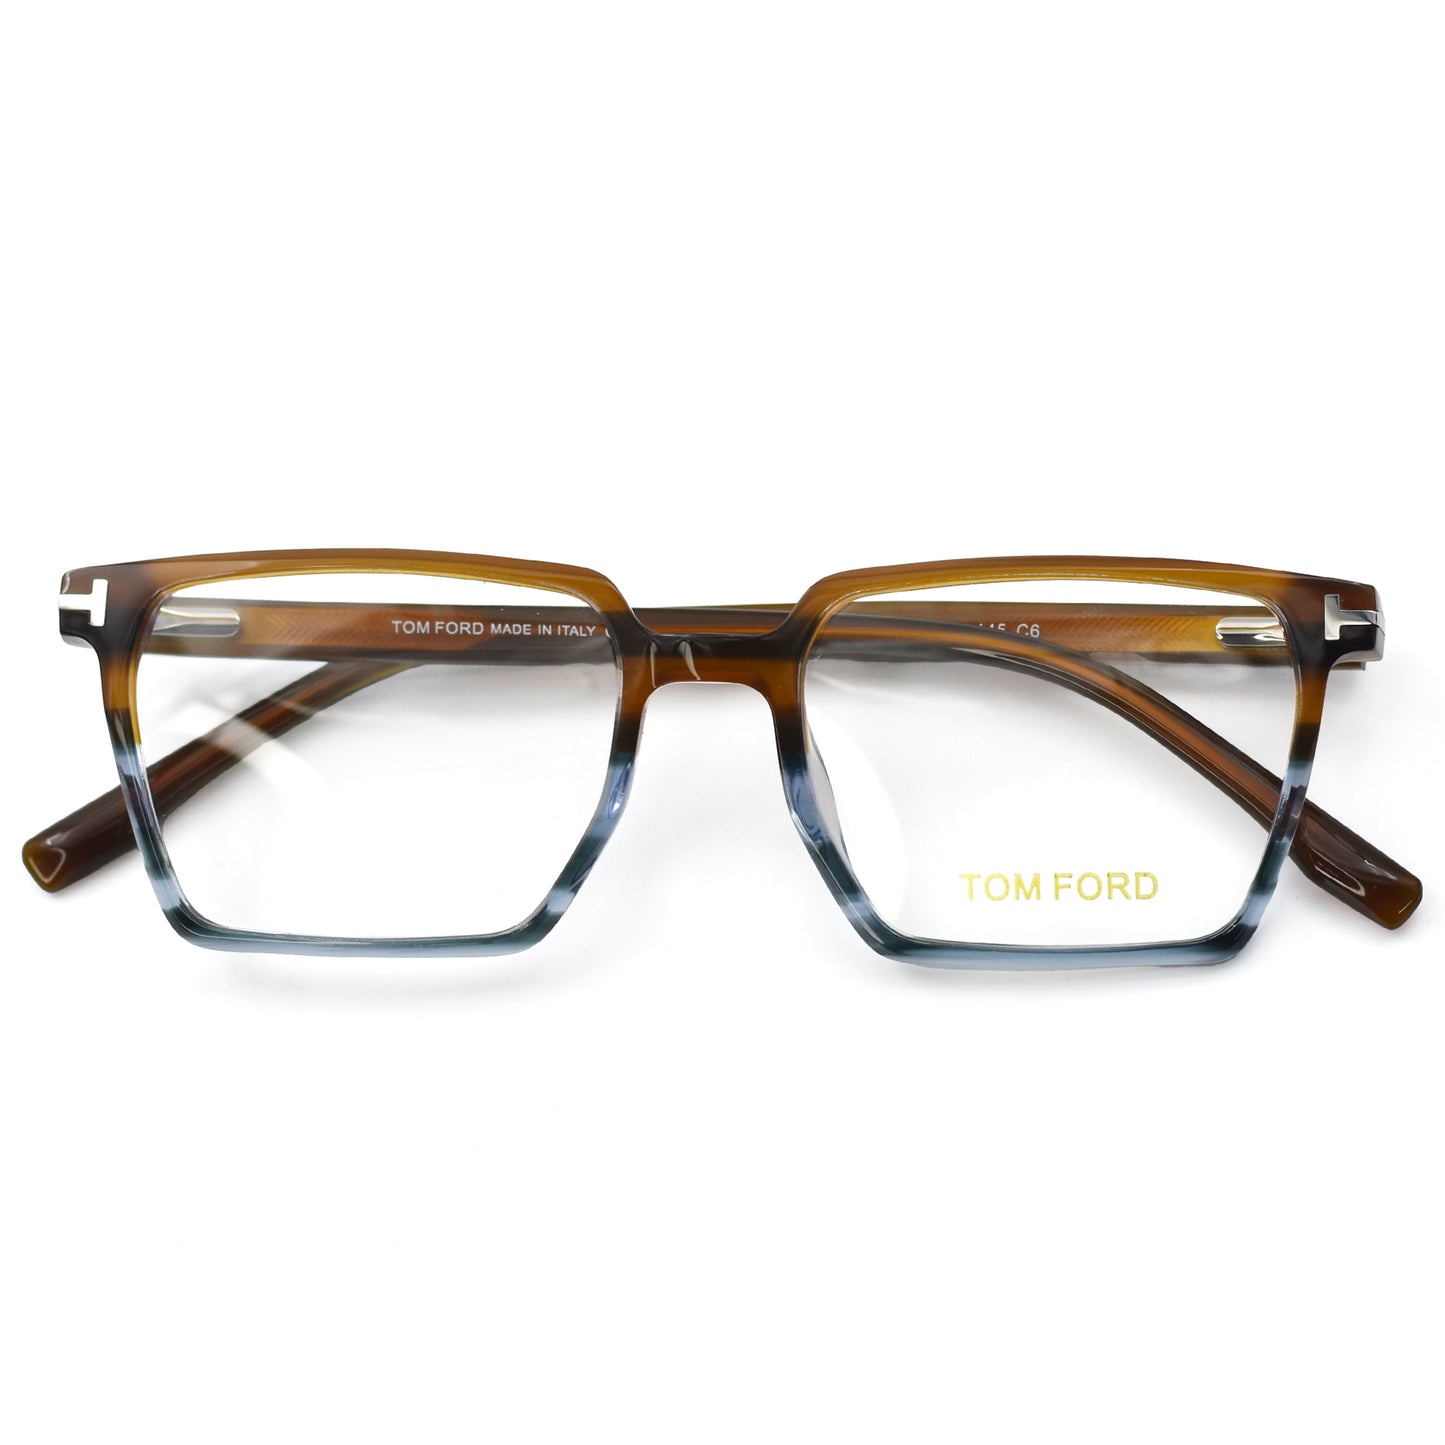 Premium Quality Tom Ford Eyeware | Eye Glass | Optic Frame | TFord Frame 76 C